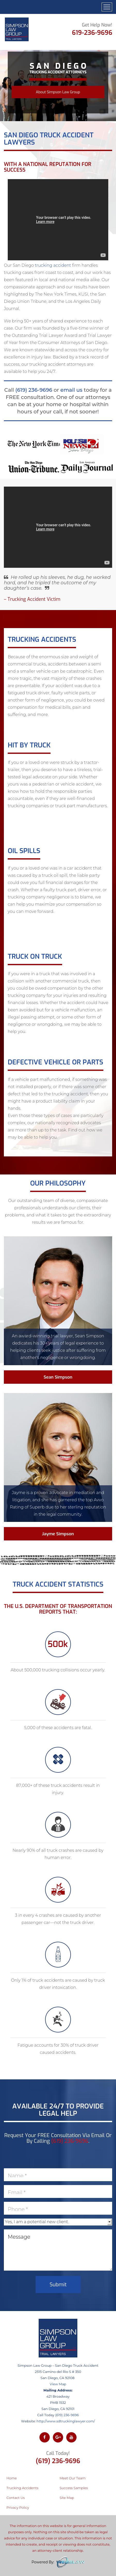 Simpson Law Group - San Diego CA Lawyers